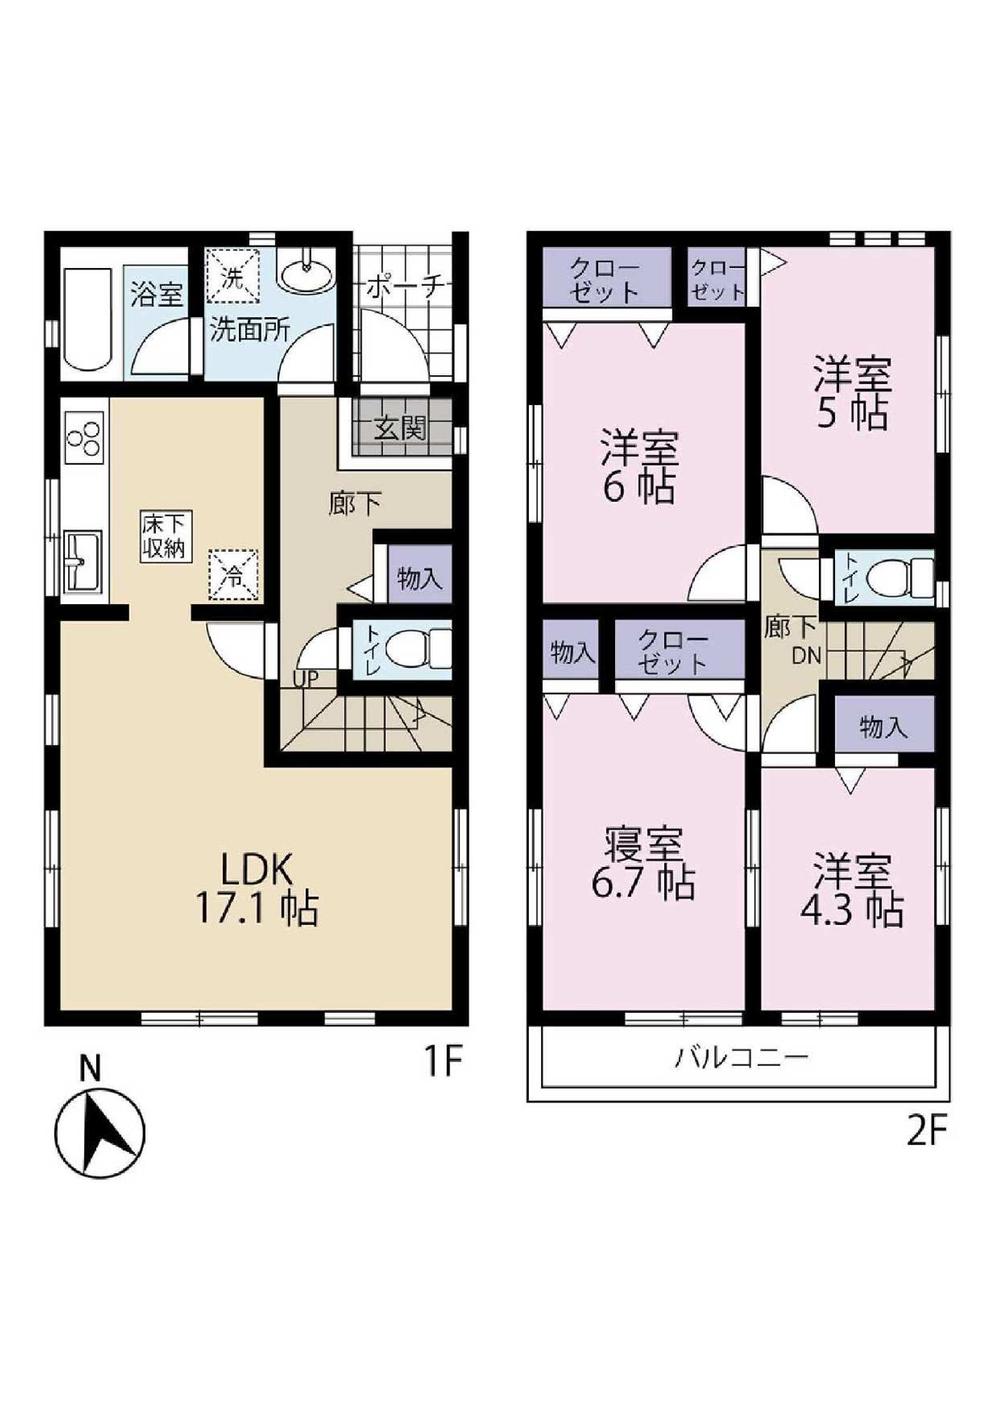 Floor plan. (Building 2), Price 33,300,000 yen, 4LDK, Land area 140.01 sq m , Building area 91.11 sq m